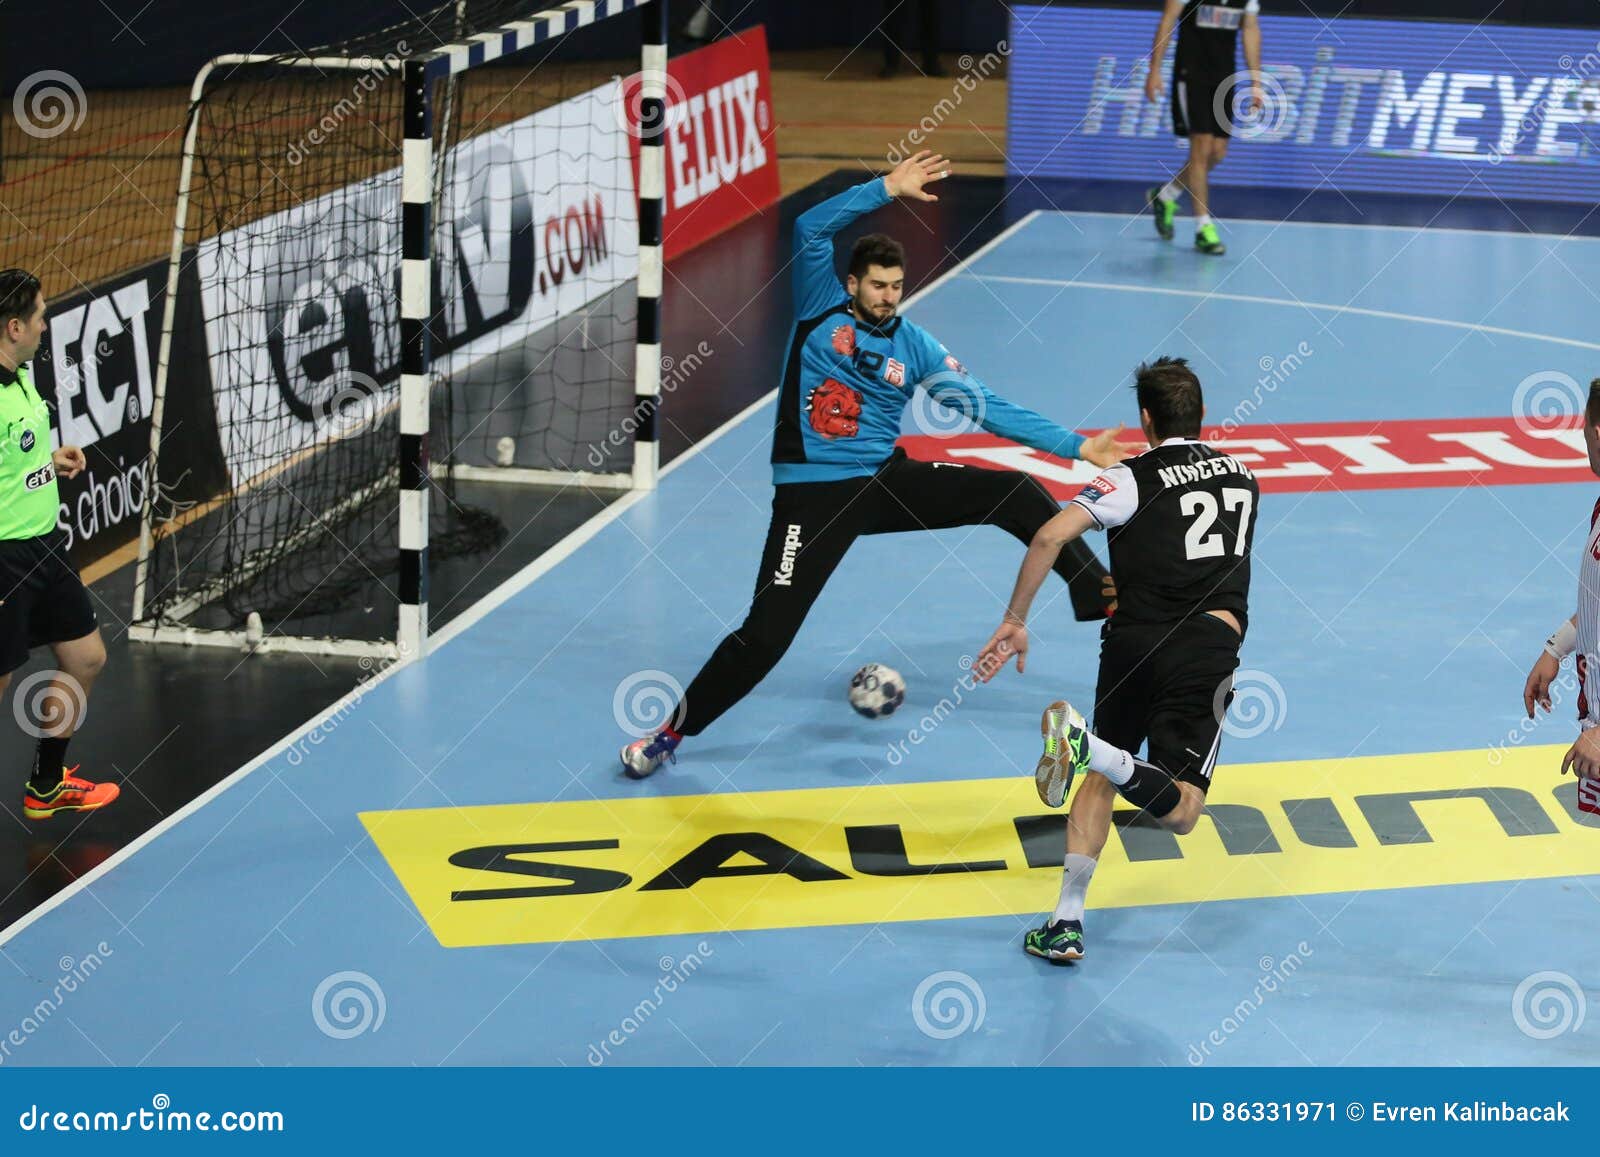 Besiktas MOGAZ HT and Dinamo Bucuresti Handball Match Photo - Image of sport, mogaz: 86331971